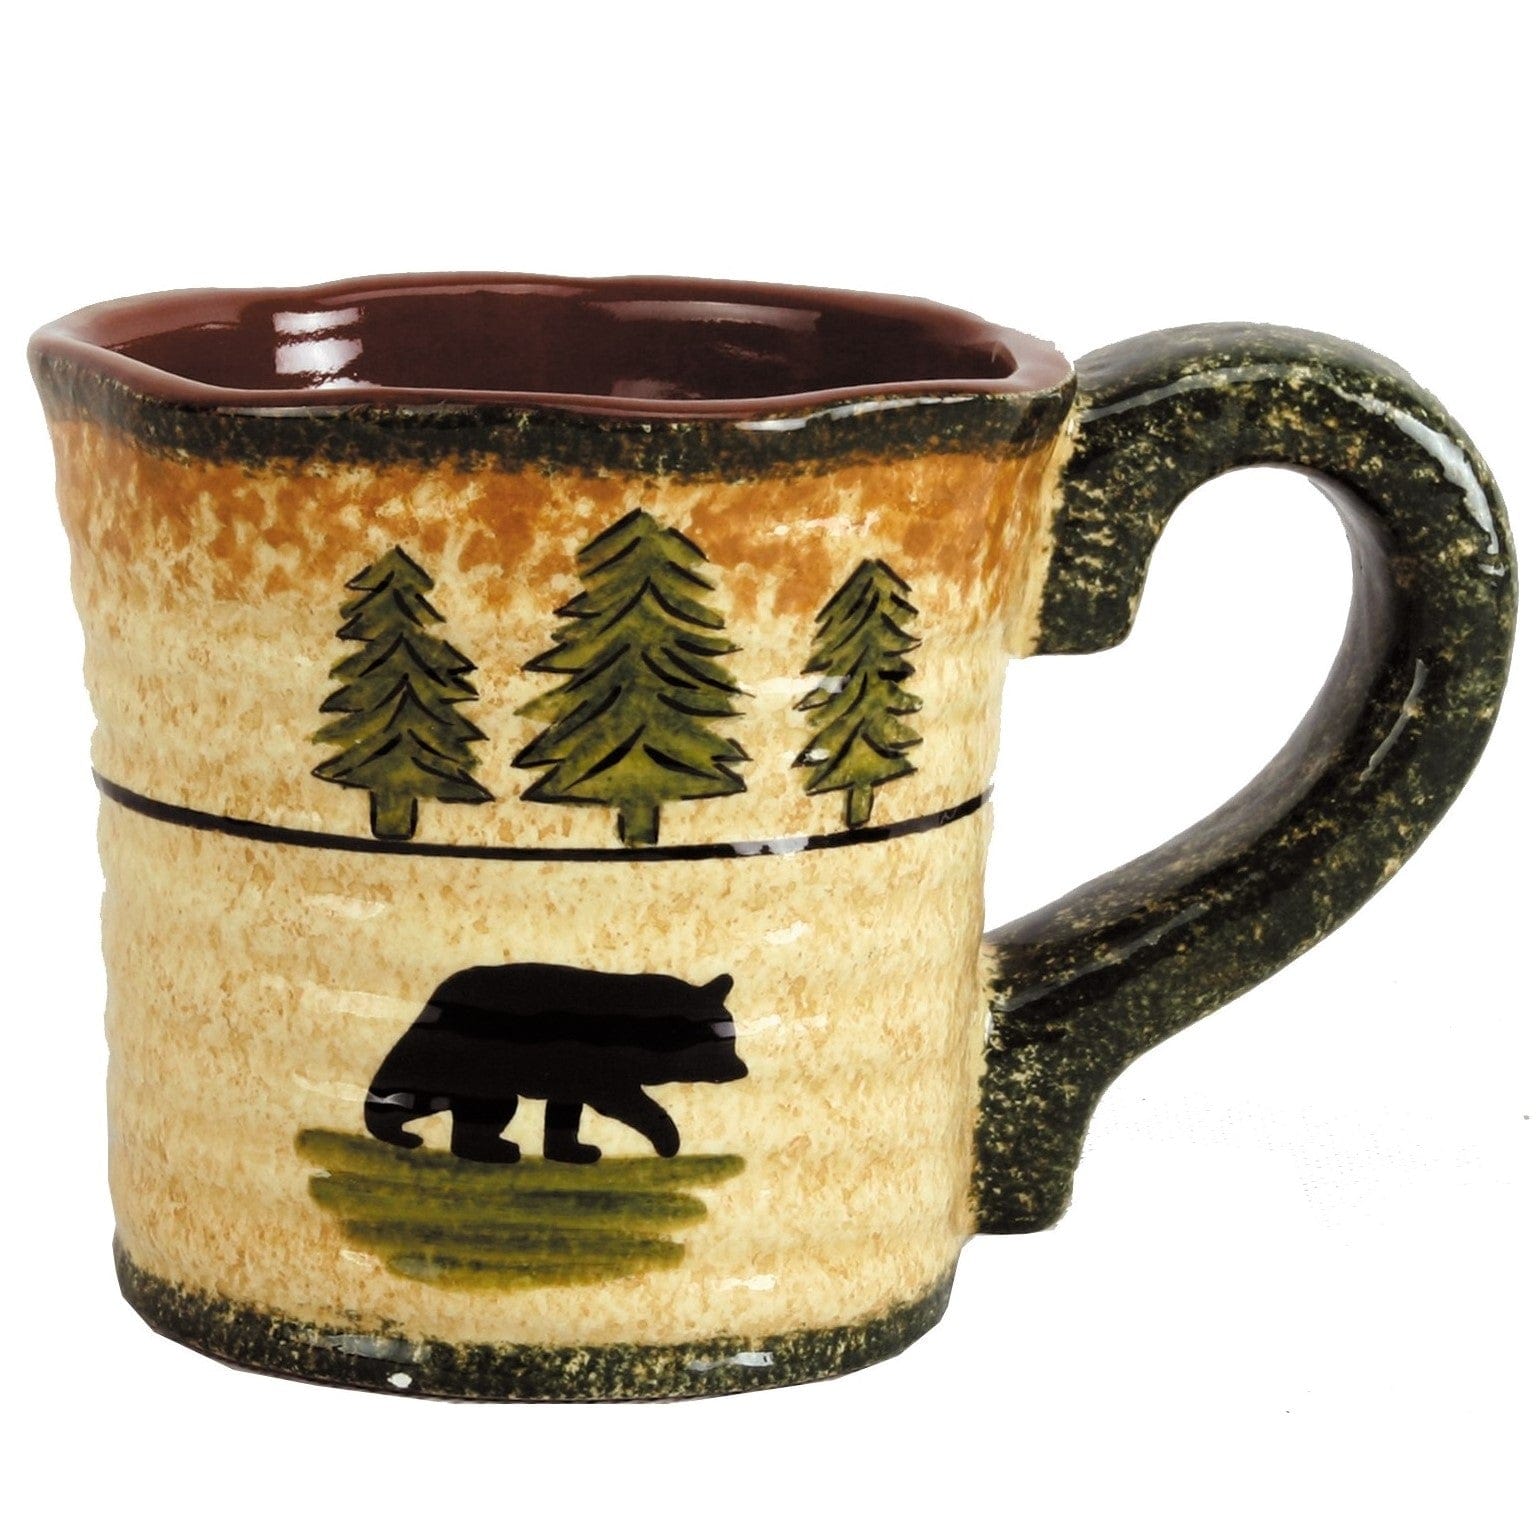 HiEnd Accents Rustic Bear Mugs Set of 4 - Tan